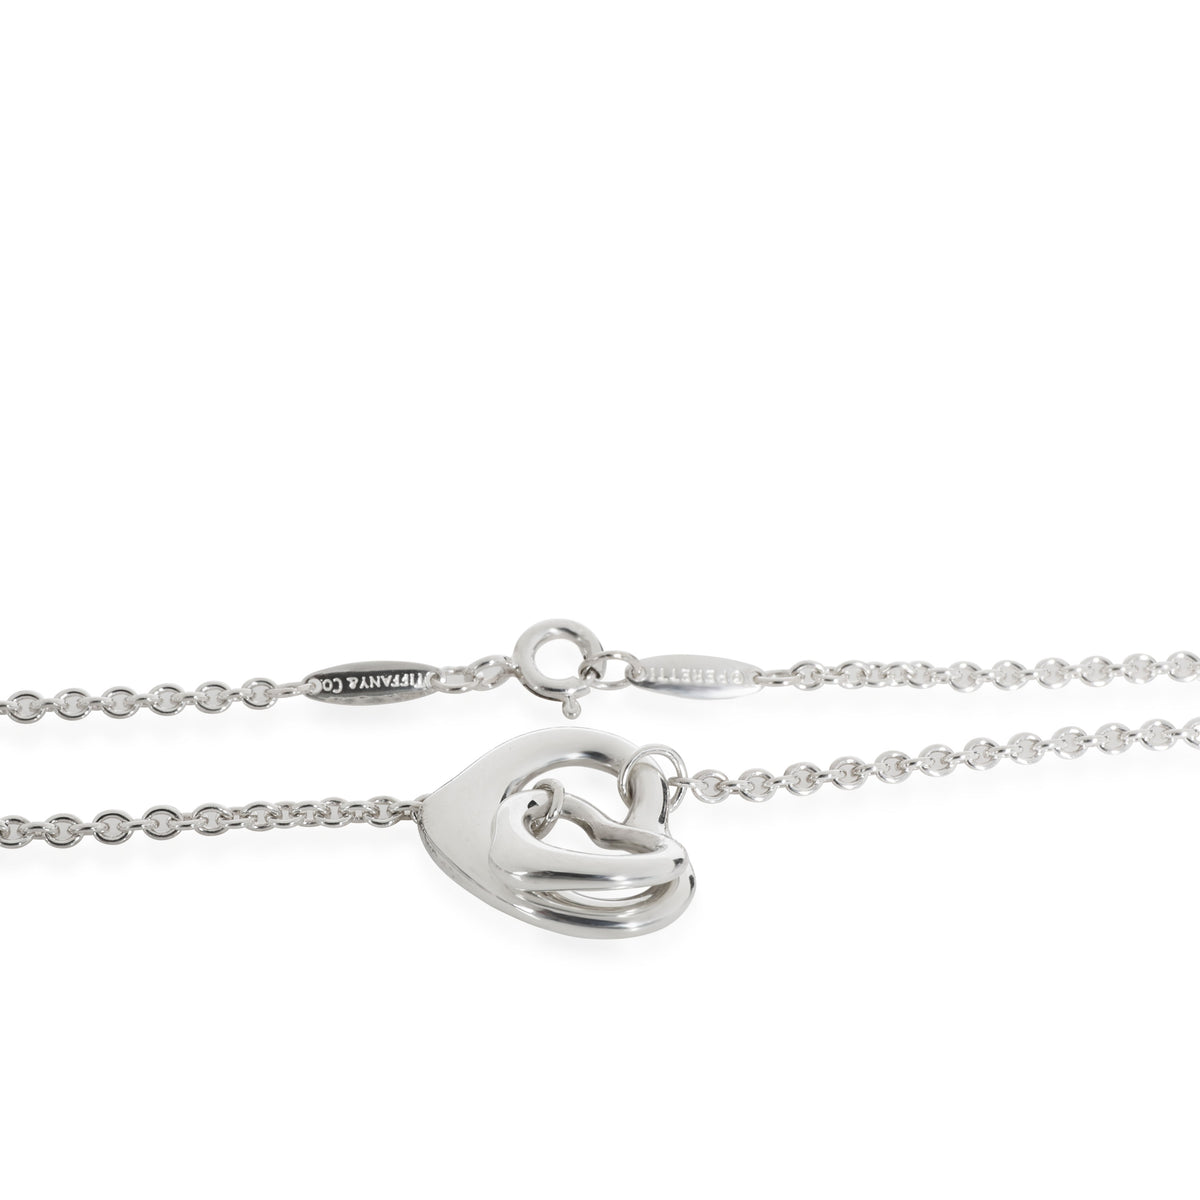 Tiffany & Co. Elsa Peretti Open Heart Lariat Necklace in  Sterling Silver